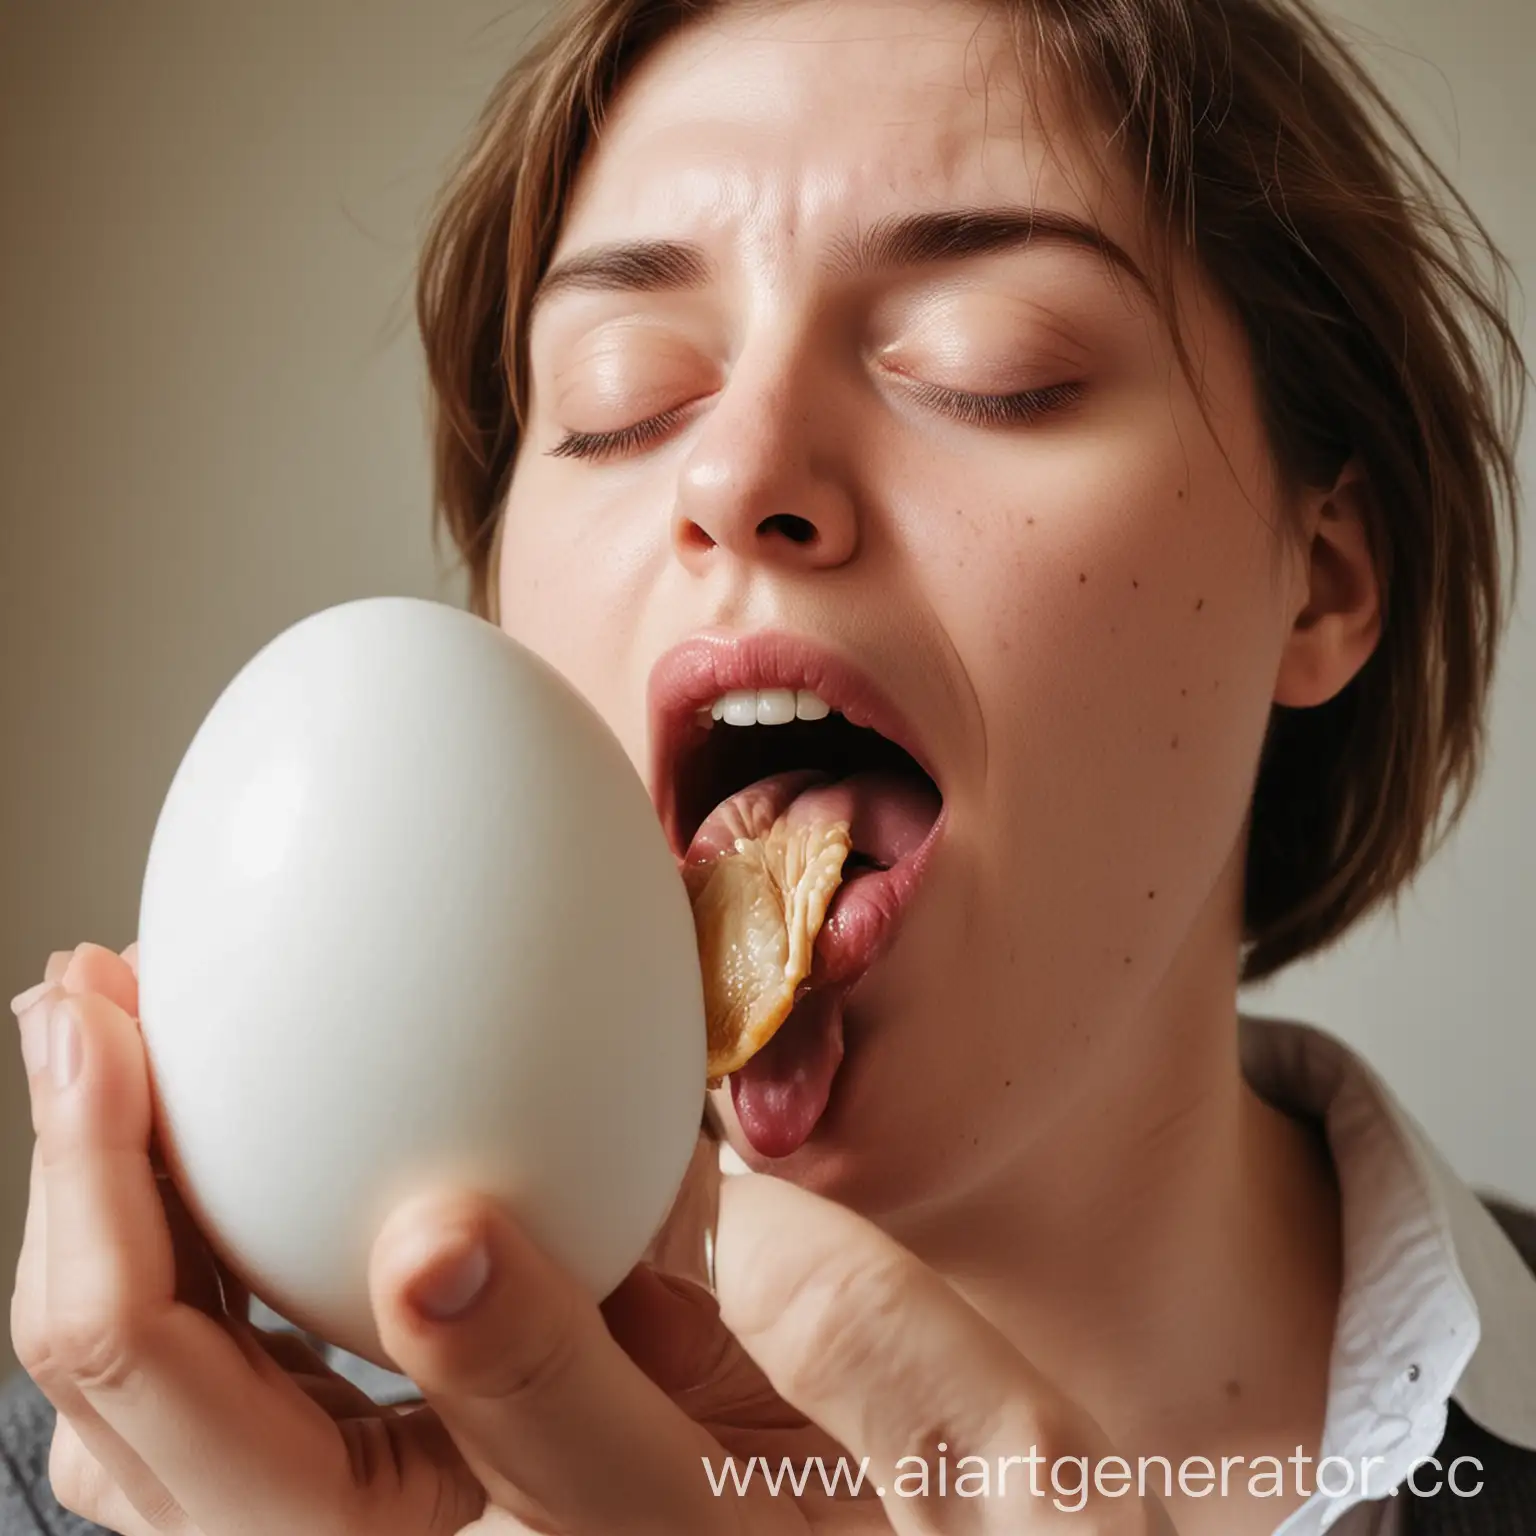 Person-Licking-Chicken-Egg-for-Million-Rubles-Reward